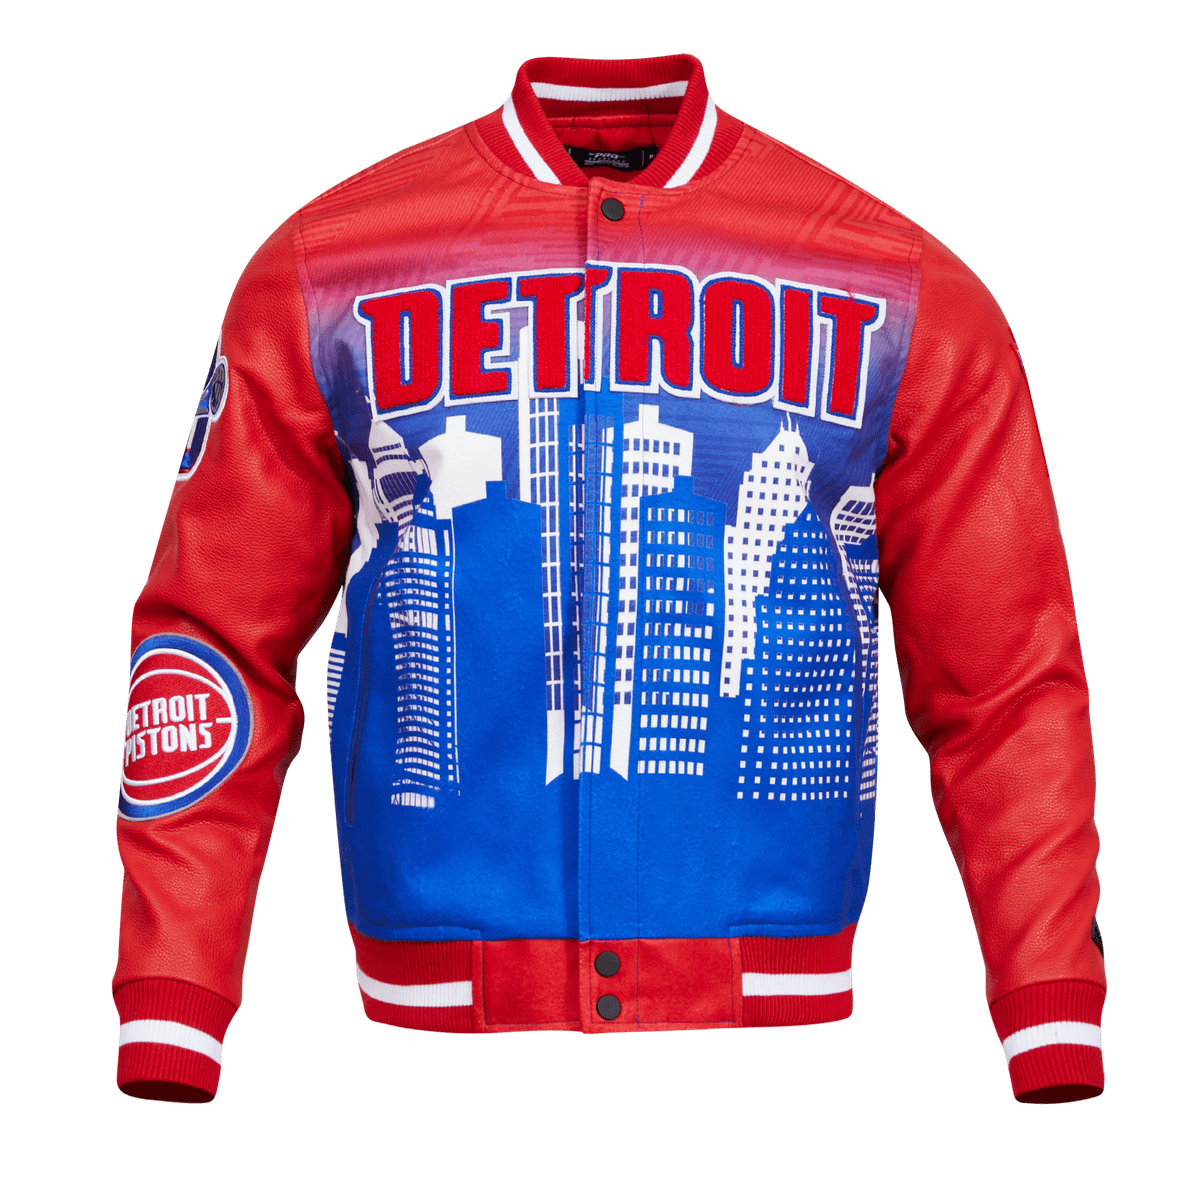 Pro Standard - Detroit Pistons Pro Team Shirt